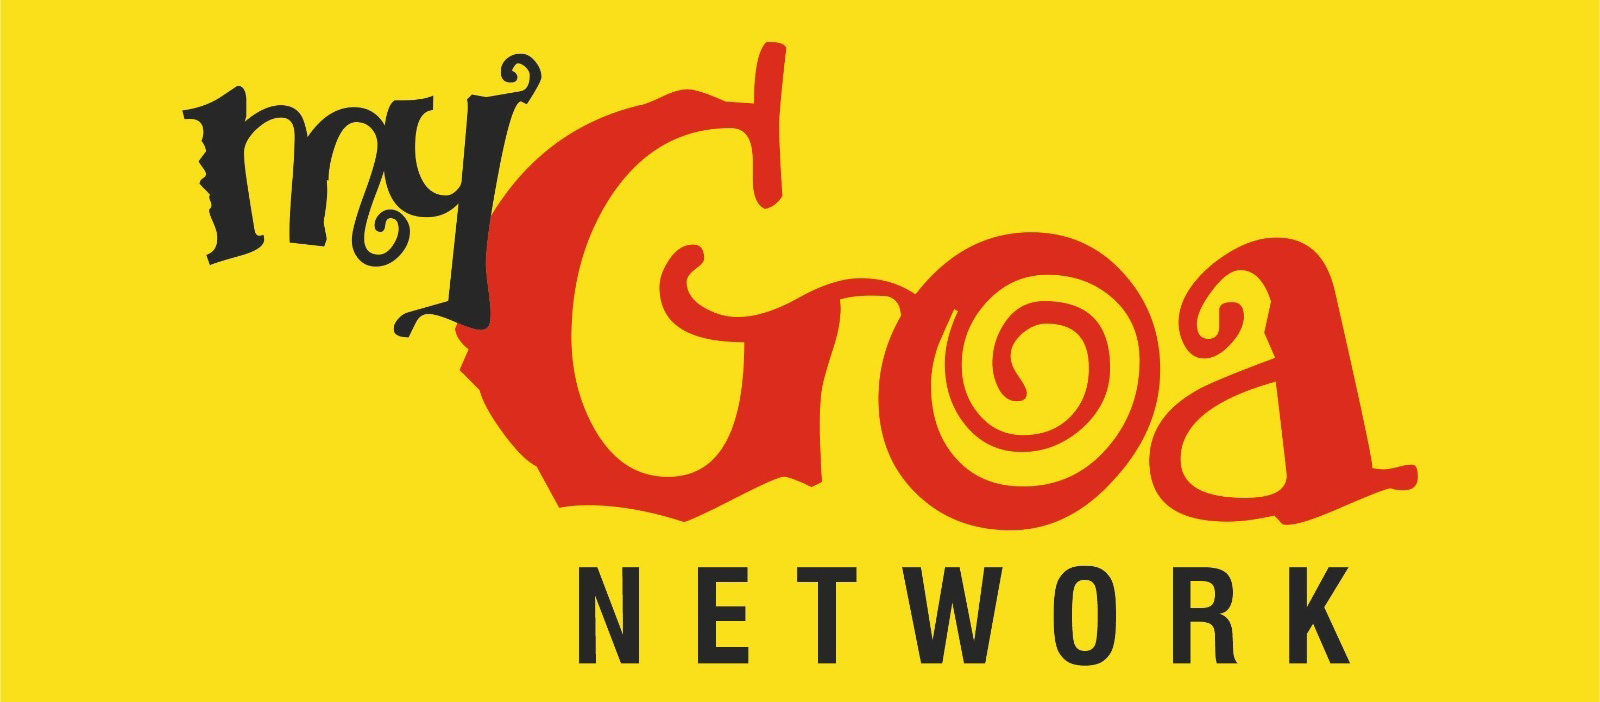 My Goa Network